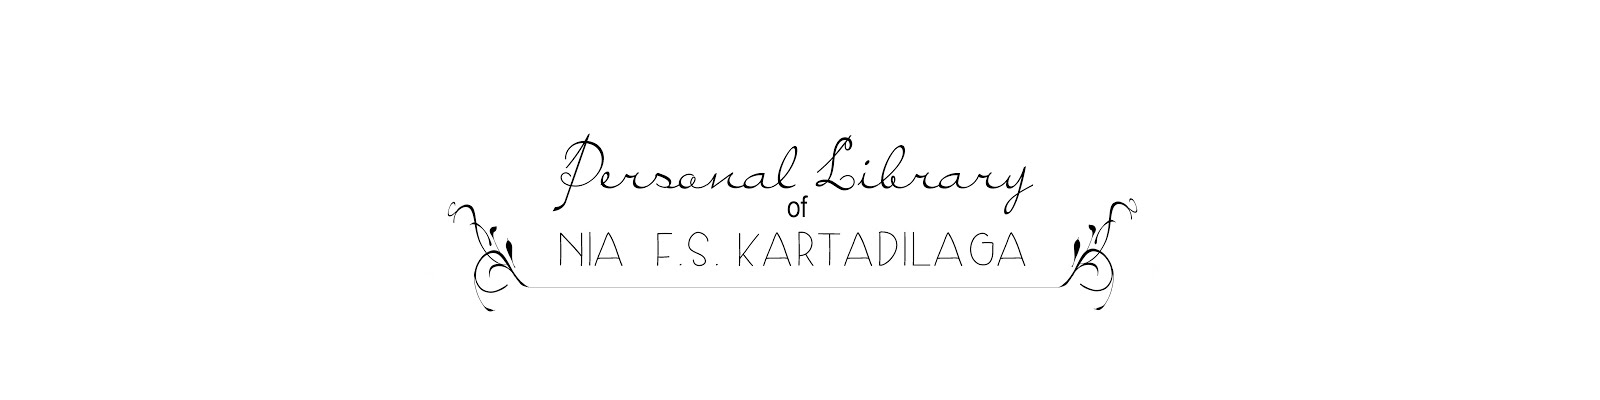 Personal Library of Nia F. S. Kartadilaga